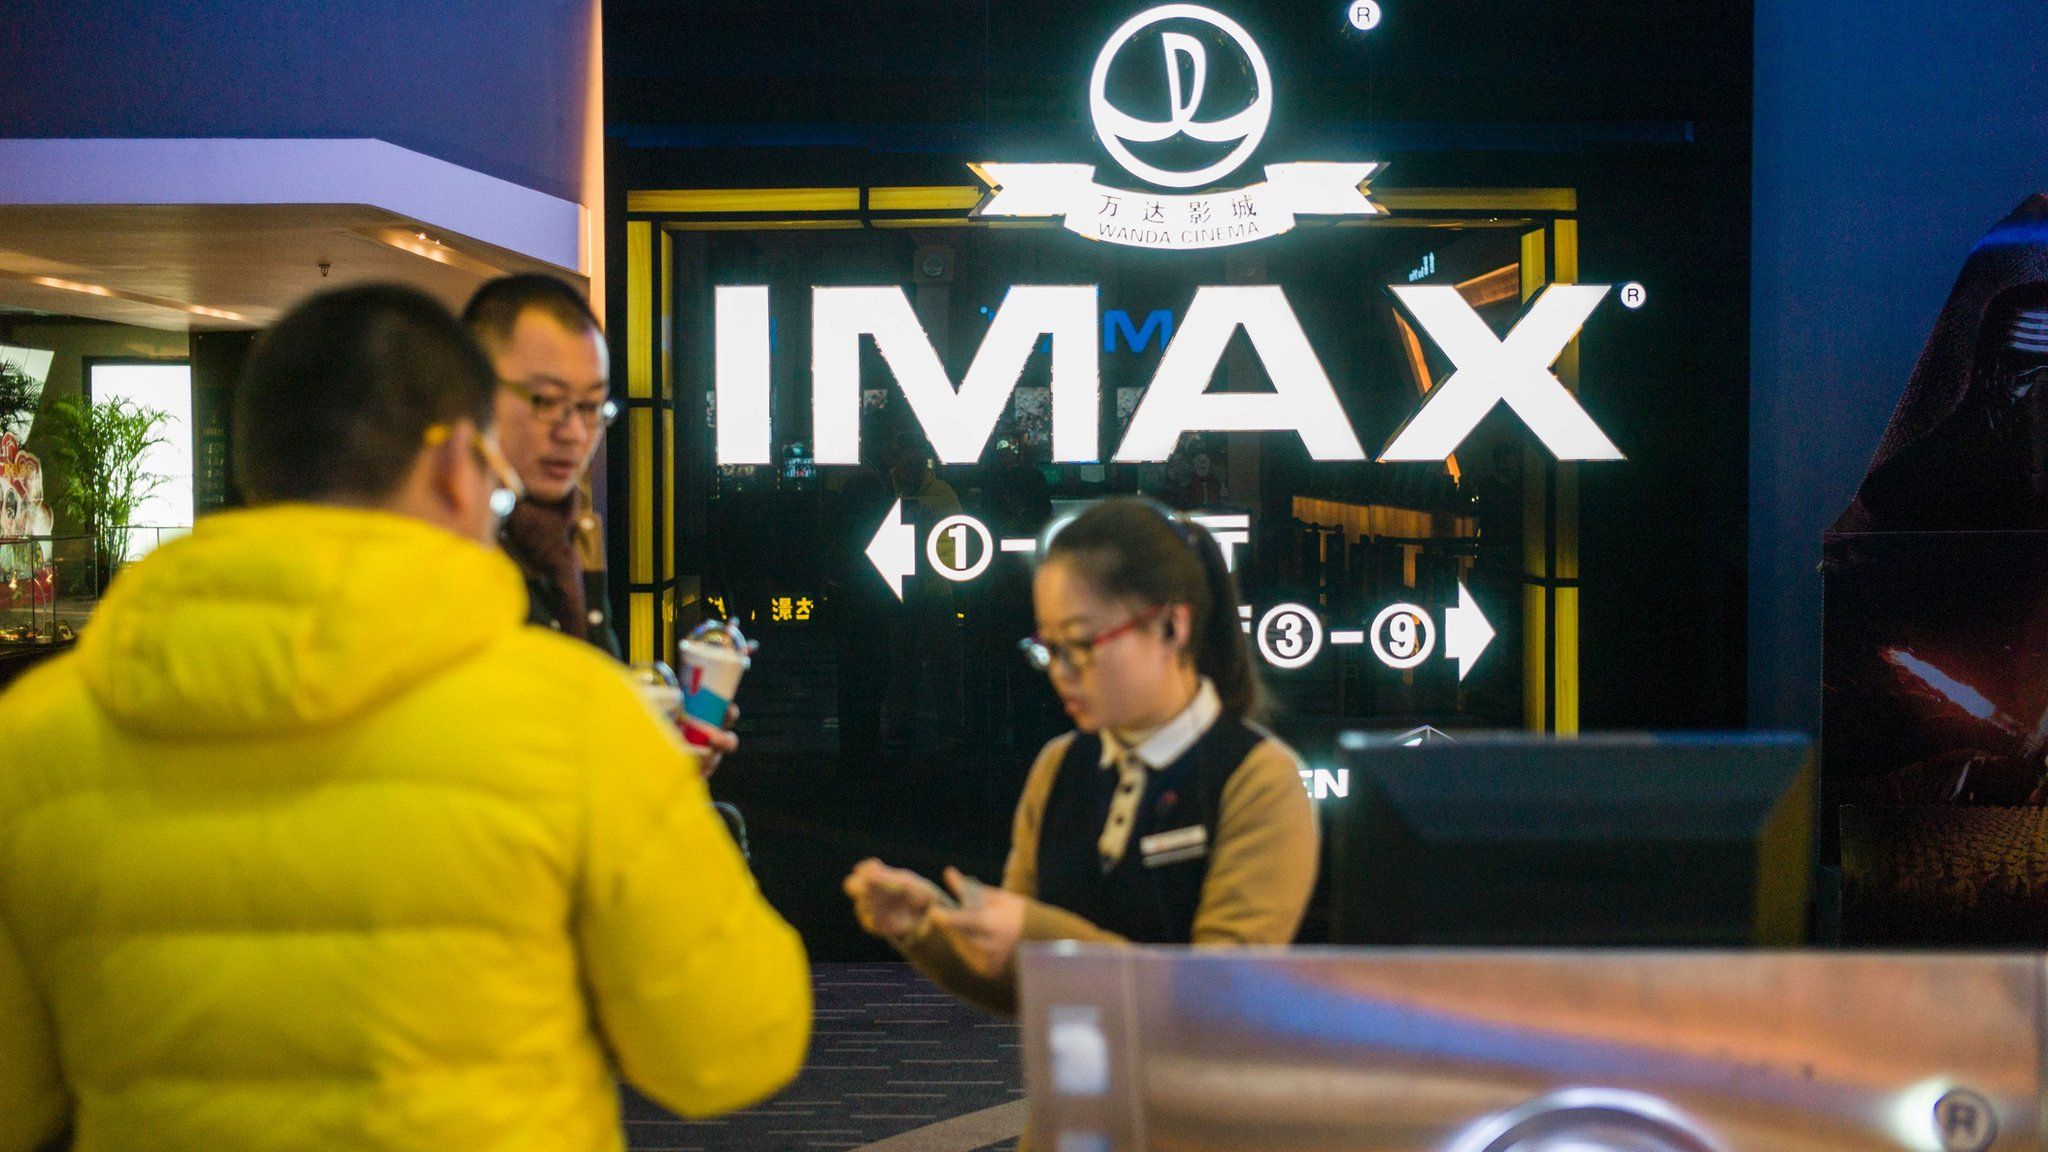 Imax cinema in China